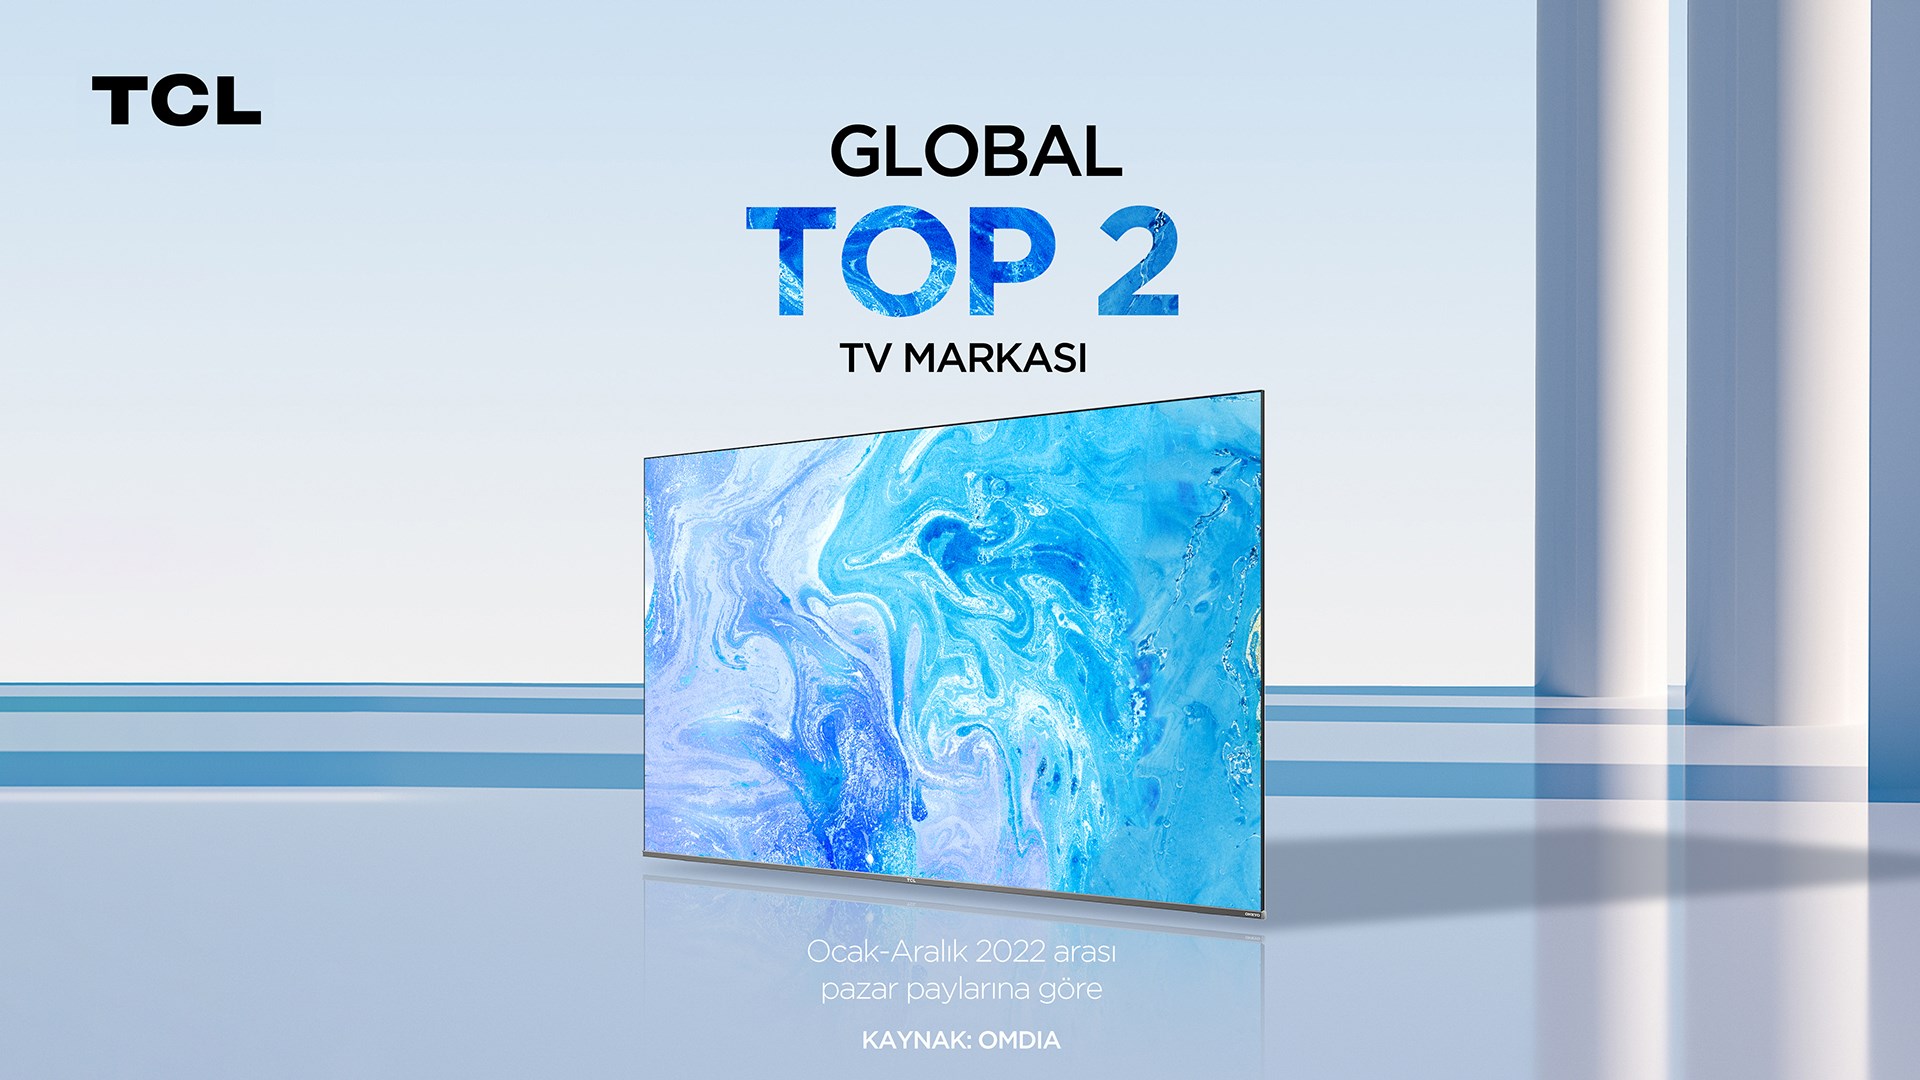 TCL global TV pazarında ise ikinci marka oldu